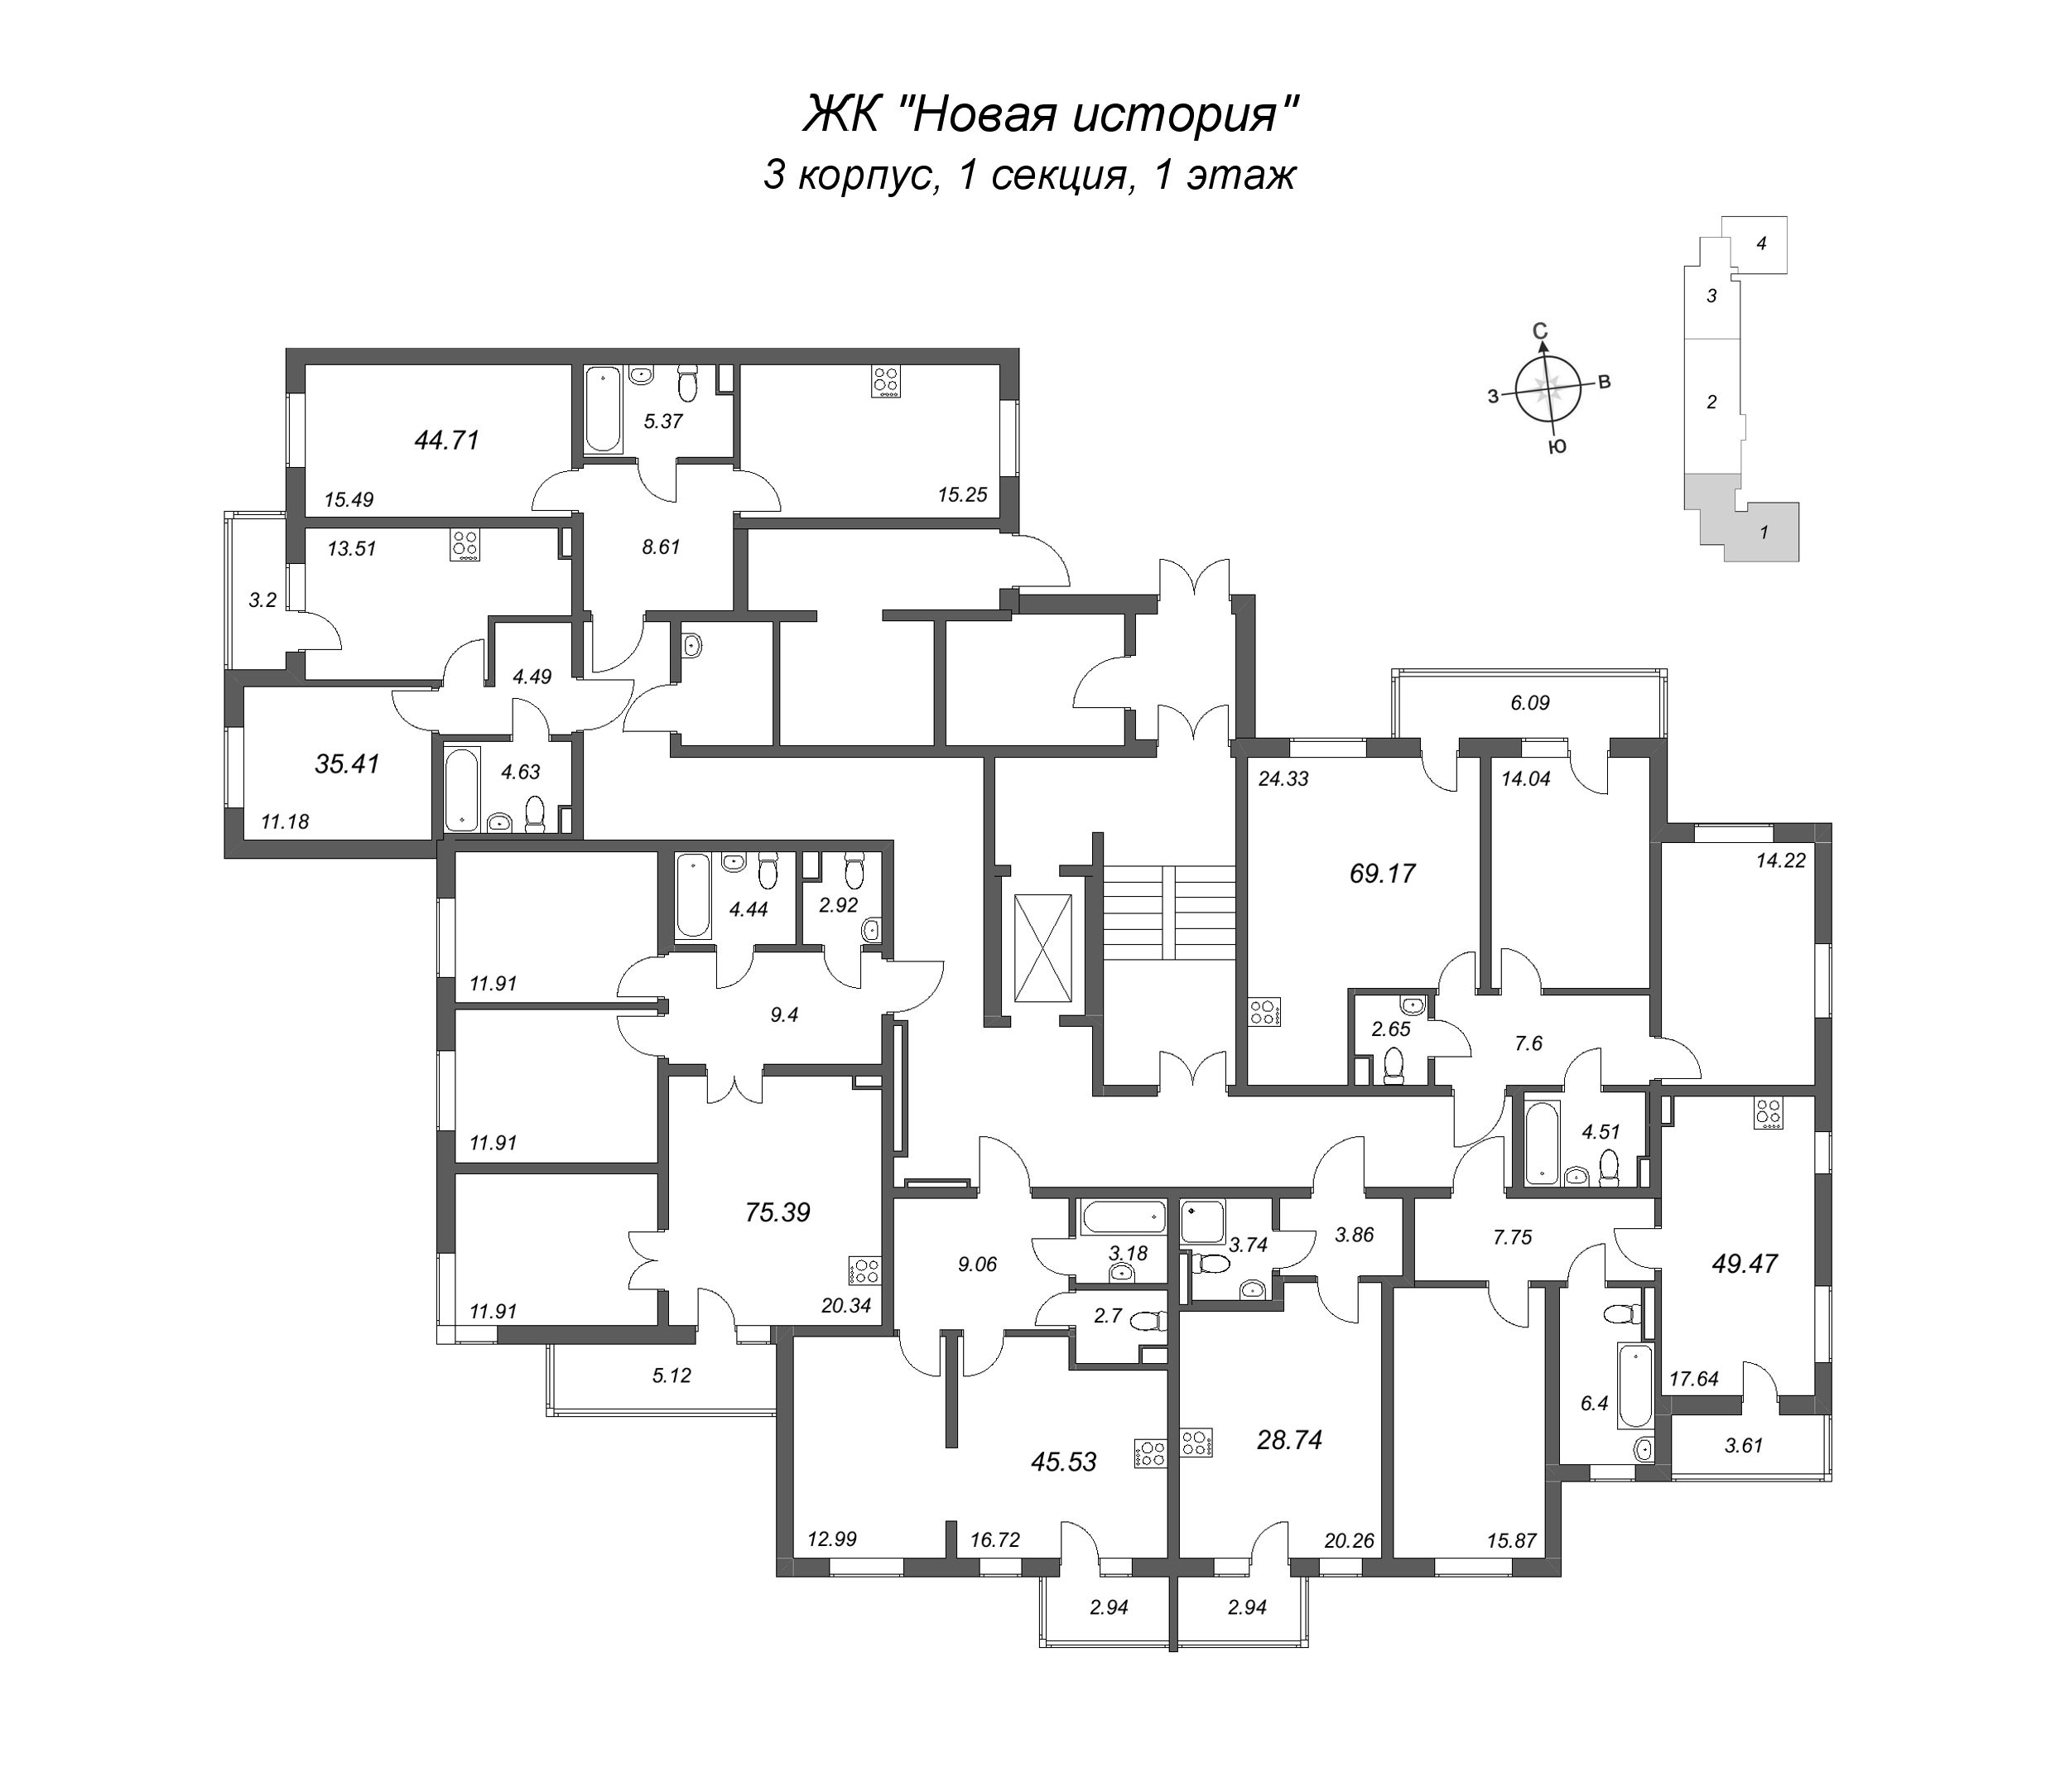 3-комнатная (Евро) квартира, 69.17 м² - планировка этажа